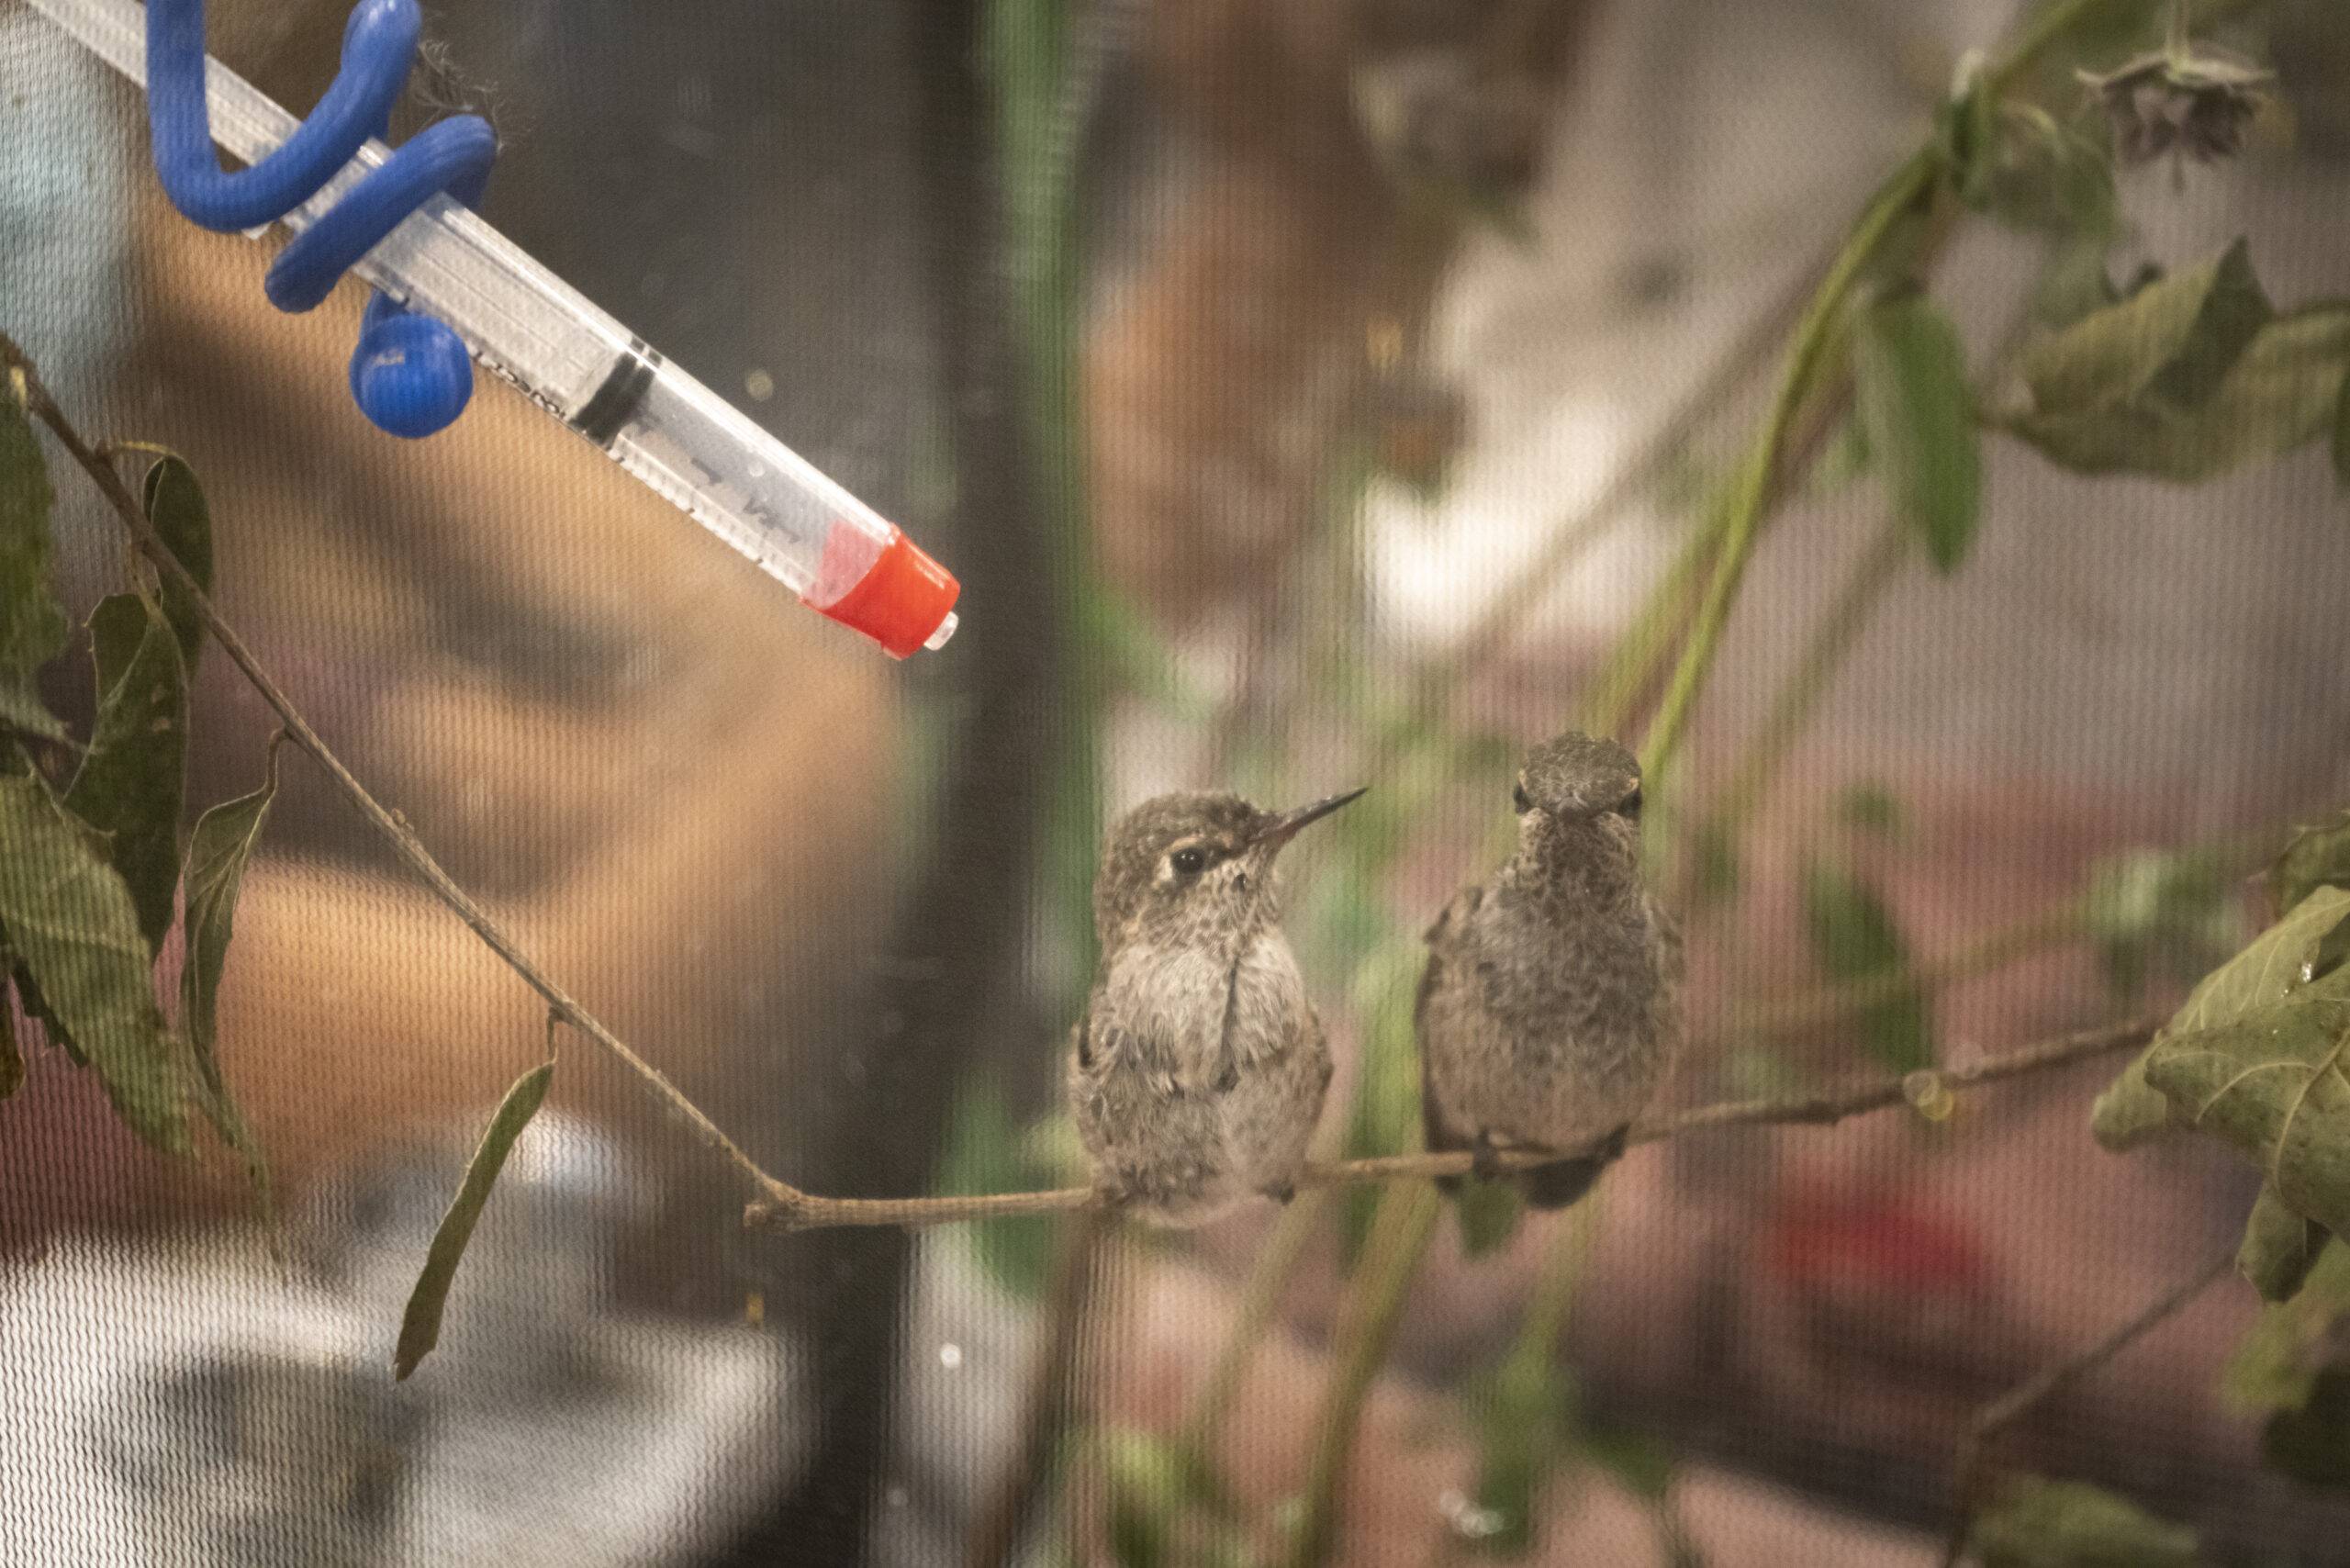 Two immature hummingbirds awaiting their food inside the wildlife hospital.